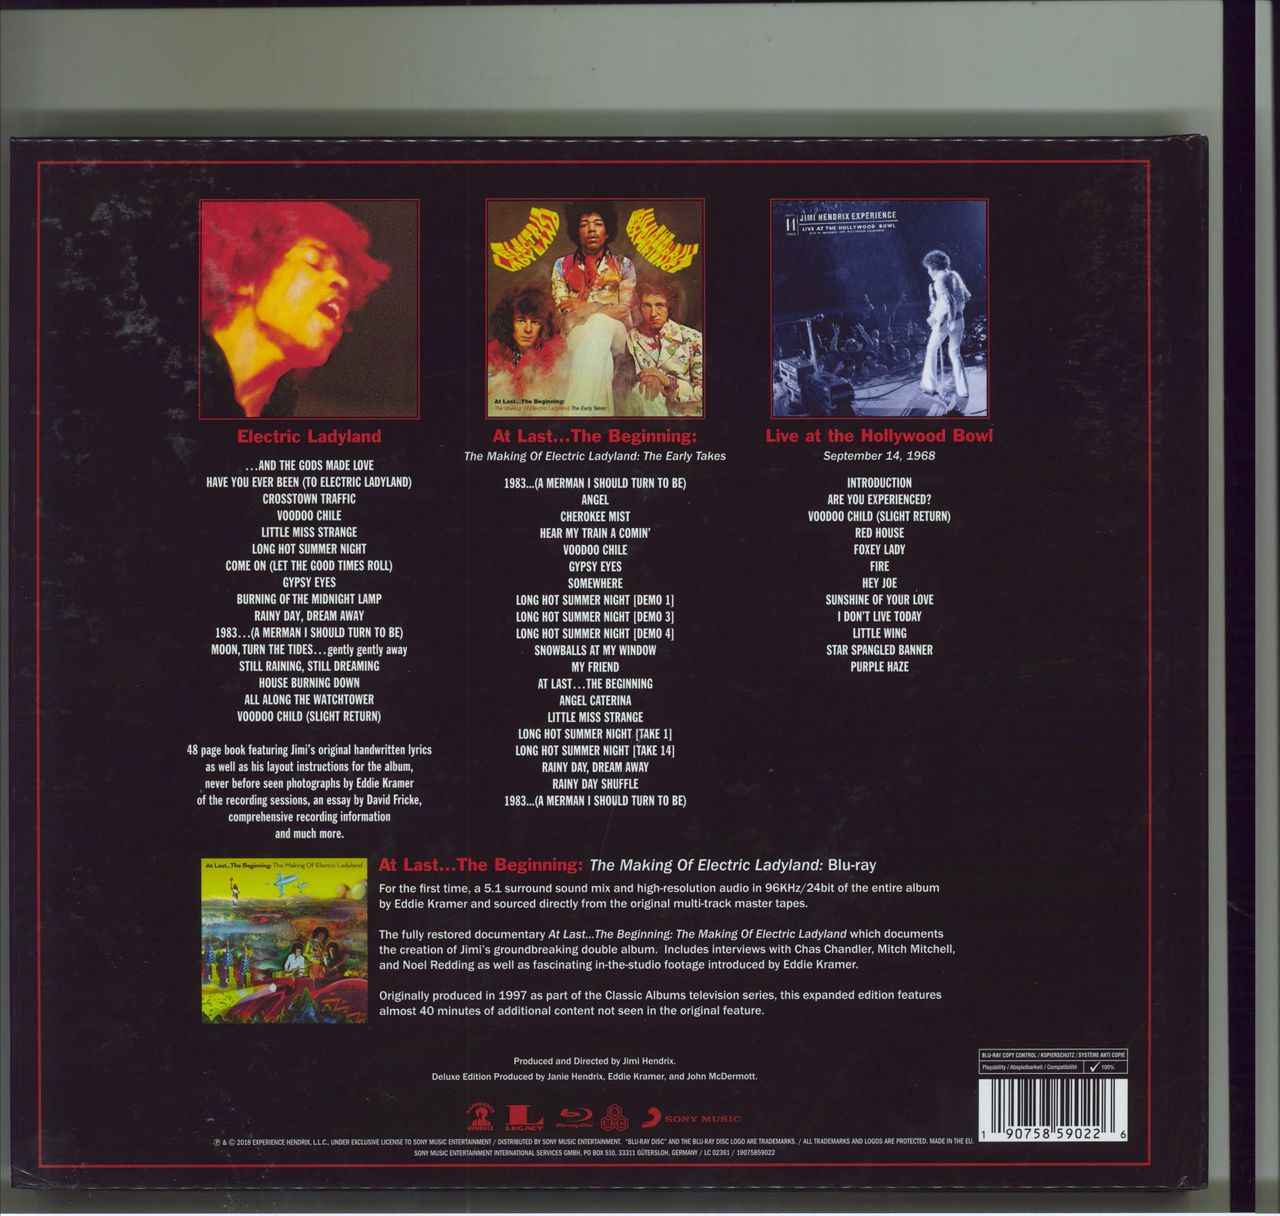 Jimi Hendrix Electric Ladyland UK Cd album box set